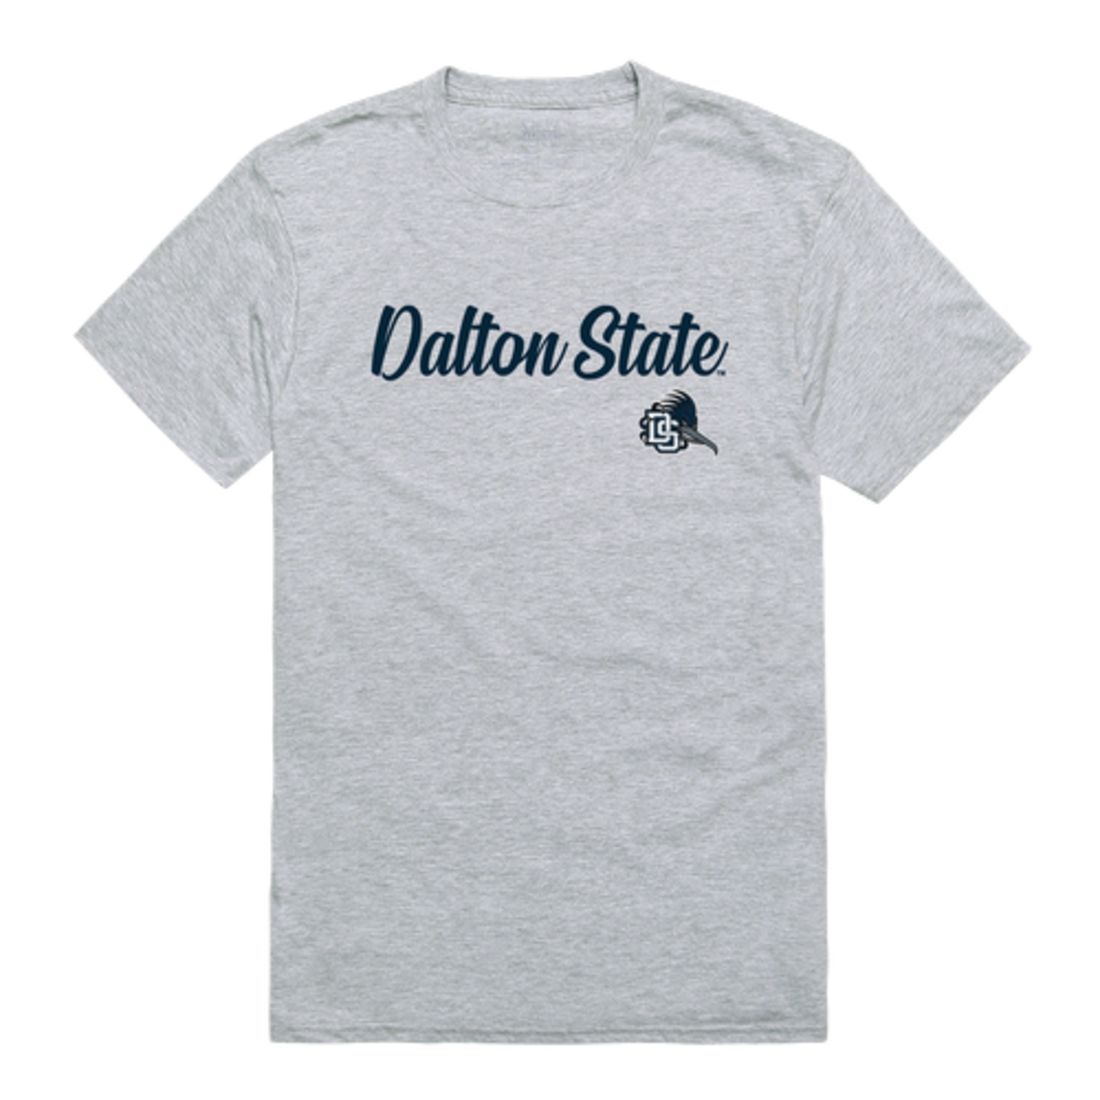 Dalton State College Roadrunners Script T-Shirt Tee